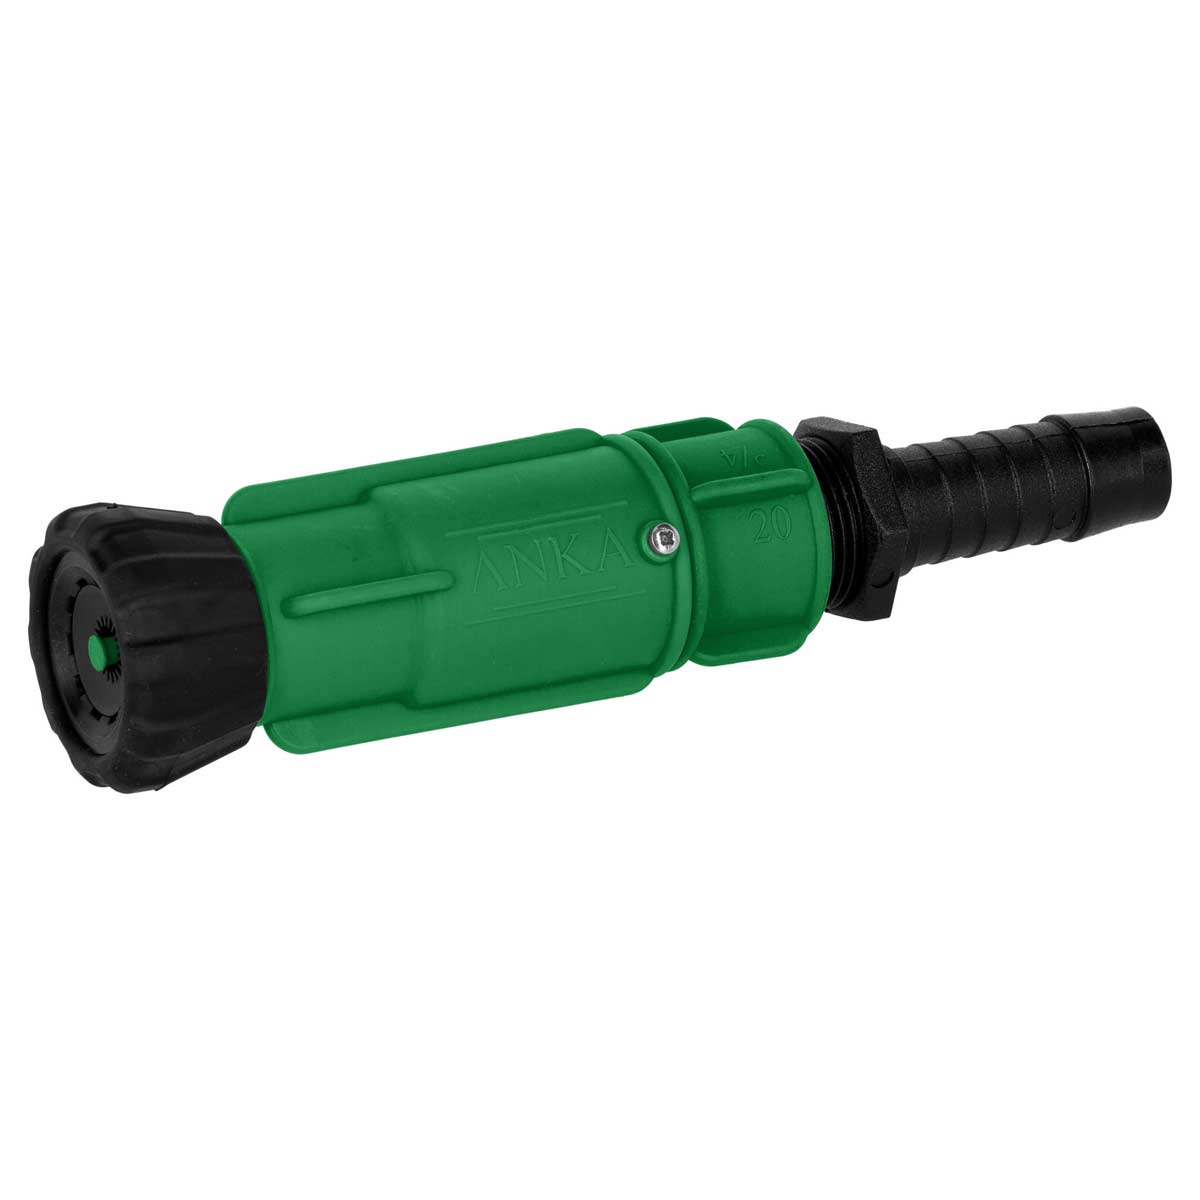 Spray Jet Anka with hose connection 3/4"